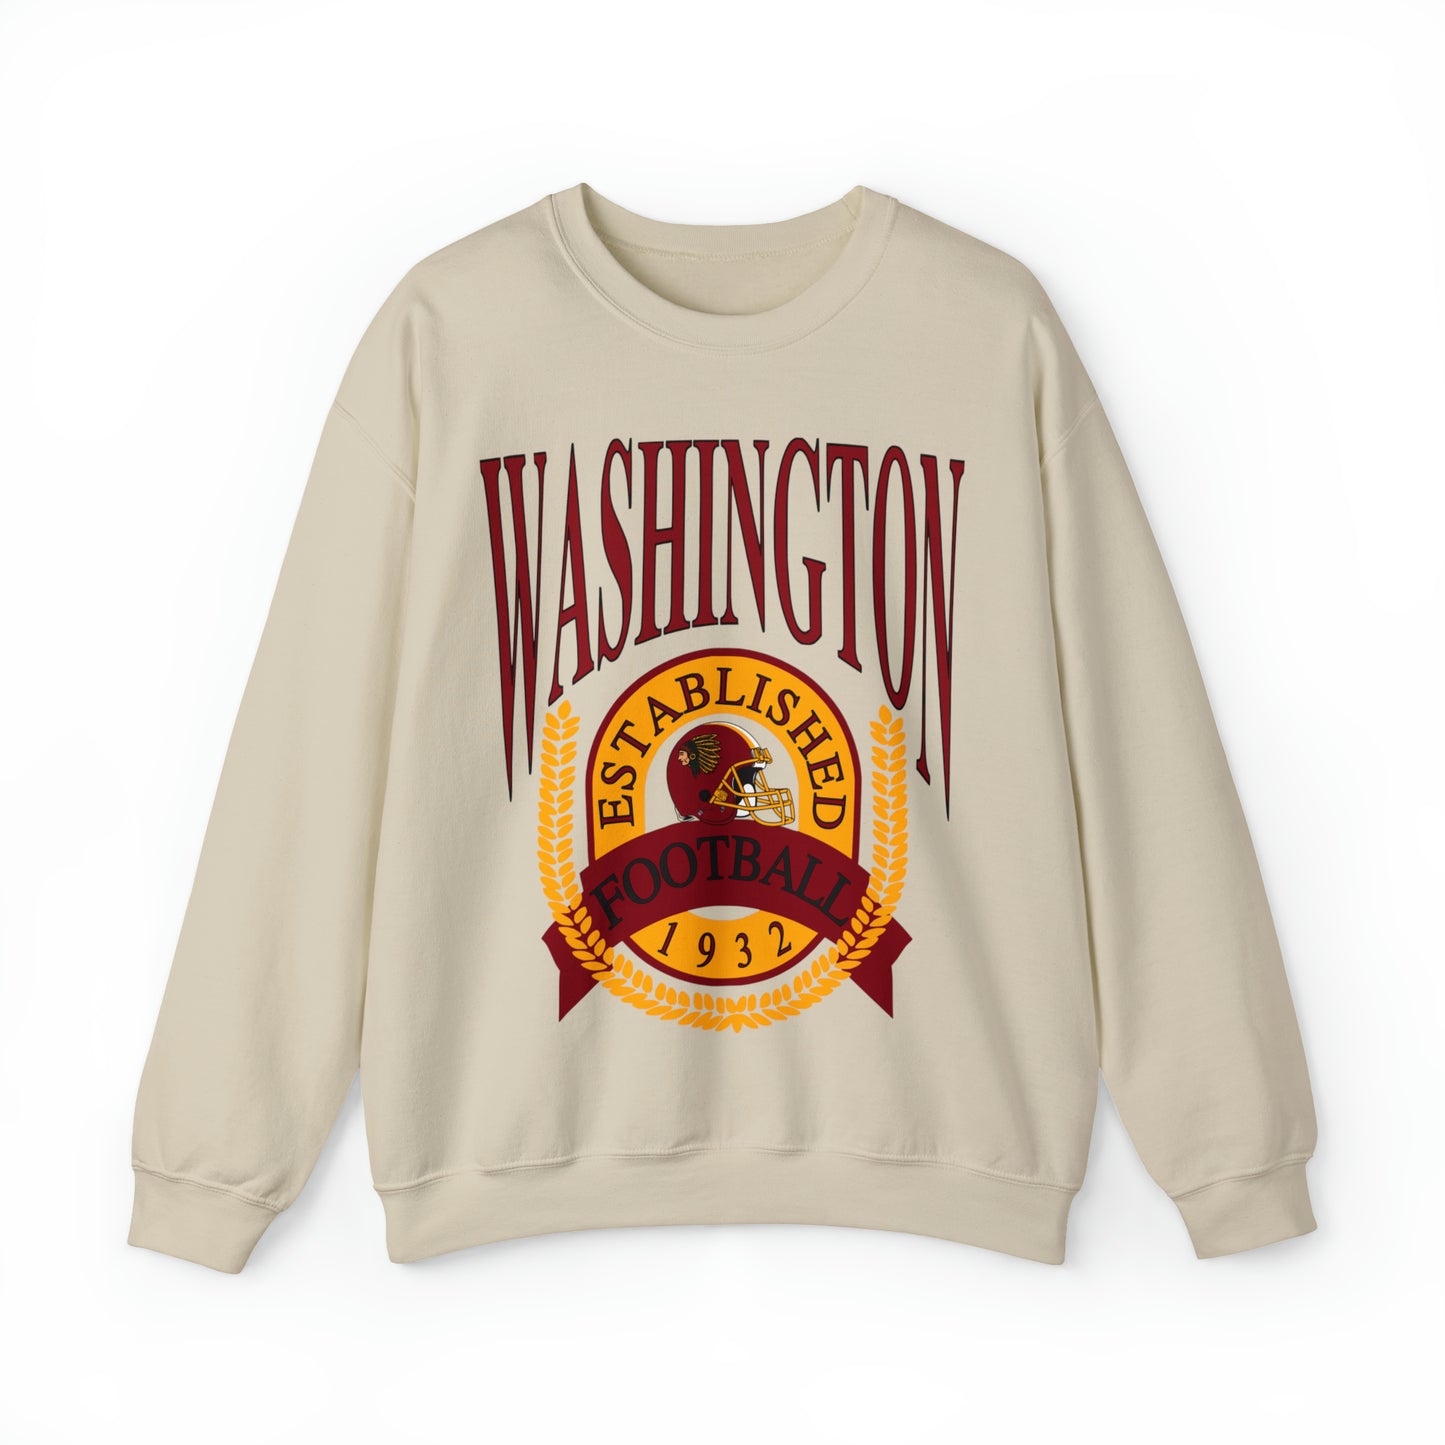 90's Washington Redskins Crewneck - Vintage Football Sweatshirt - Retro Commanders 70's, 80's, 90's - Design 1